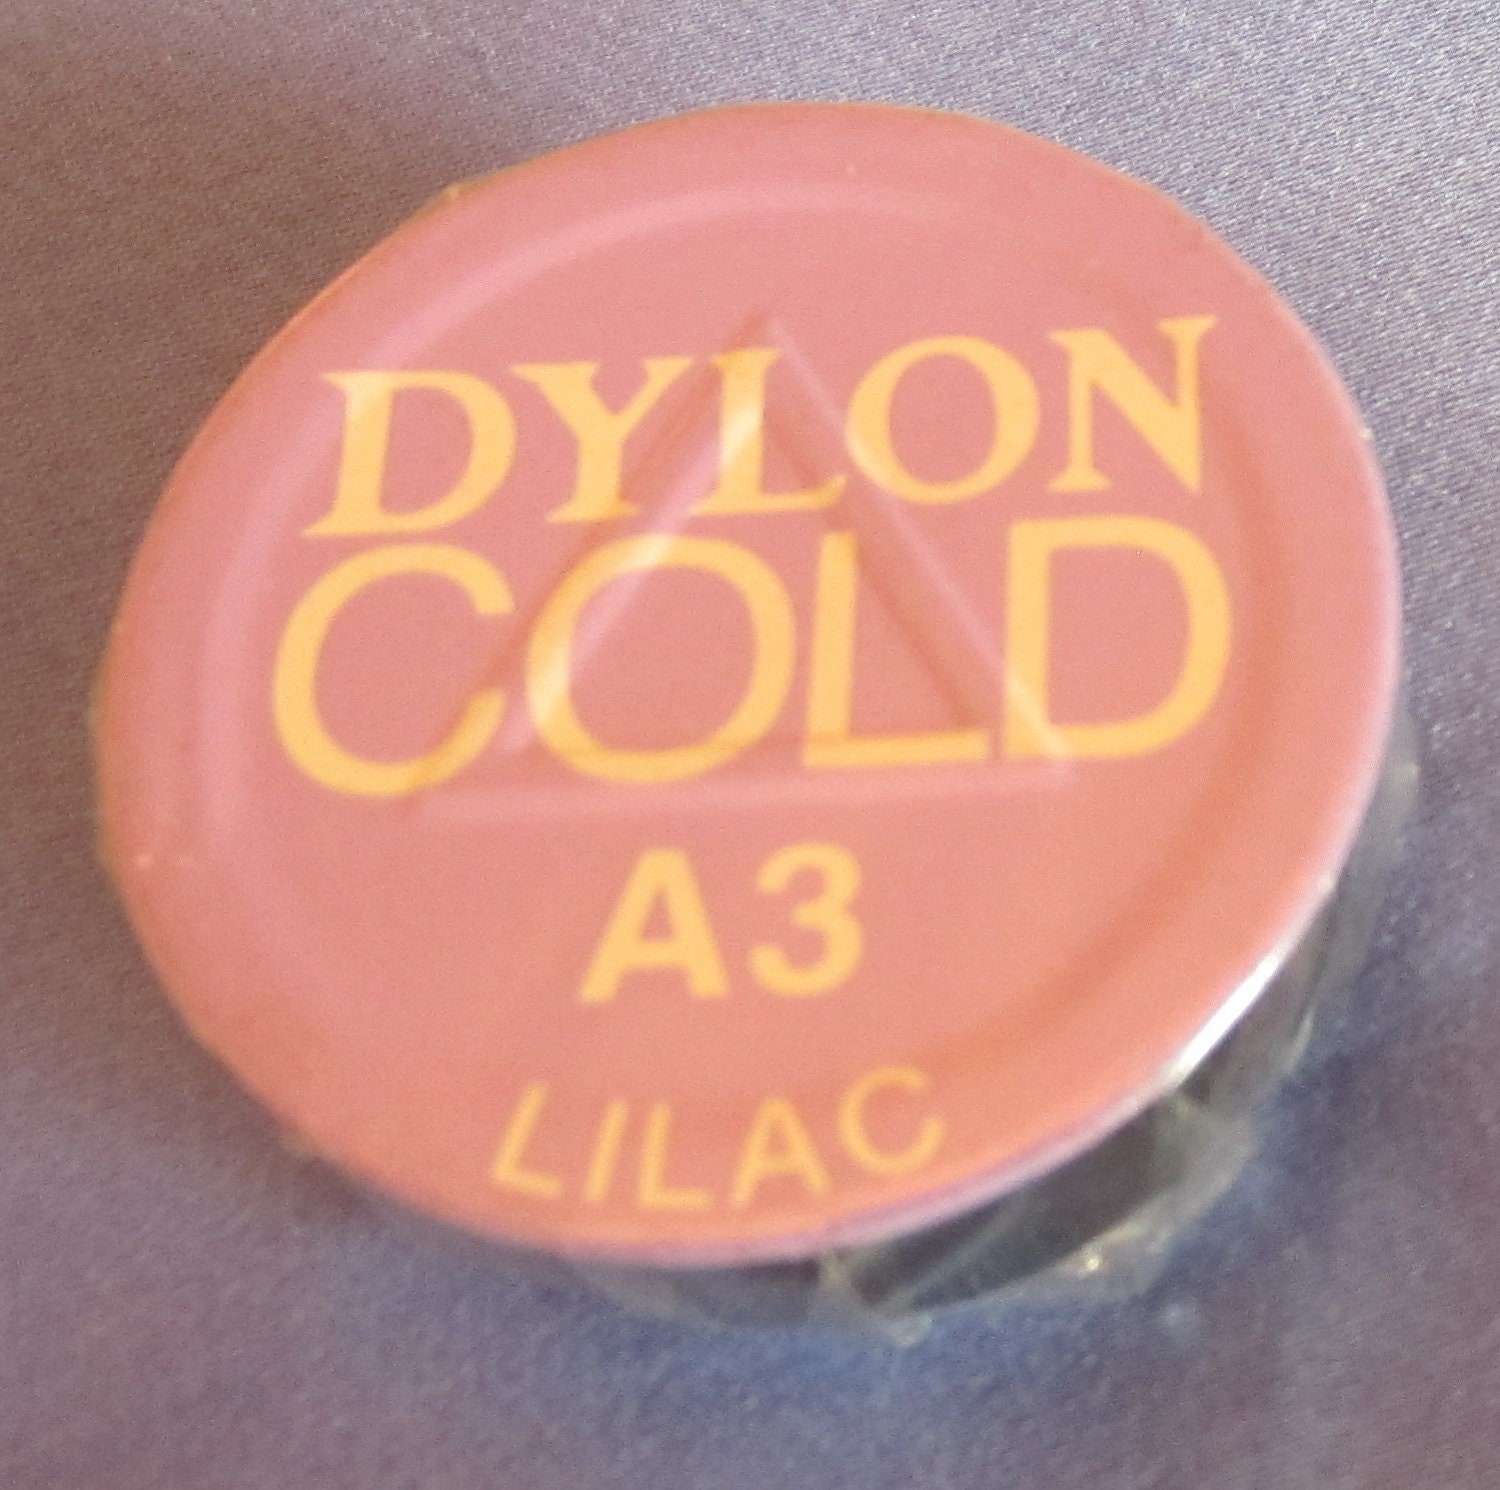 Dylon Fabric Dye All Purposes. 5gram 